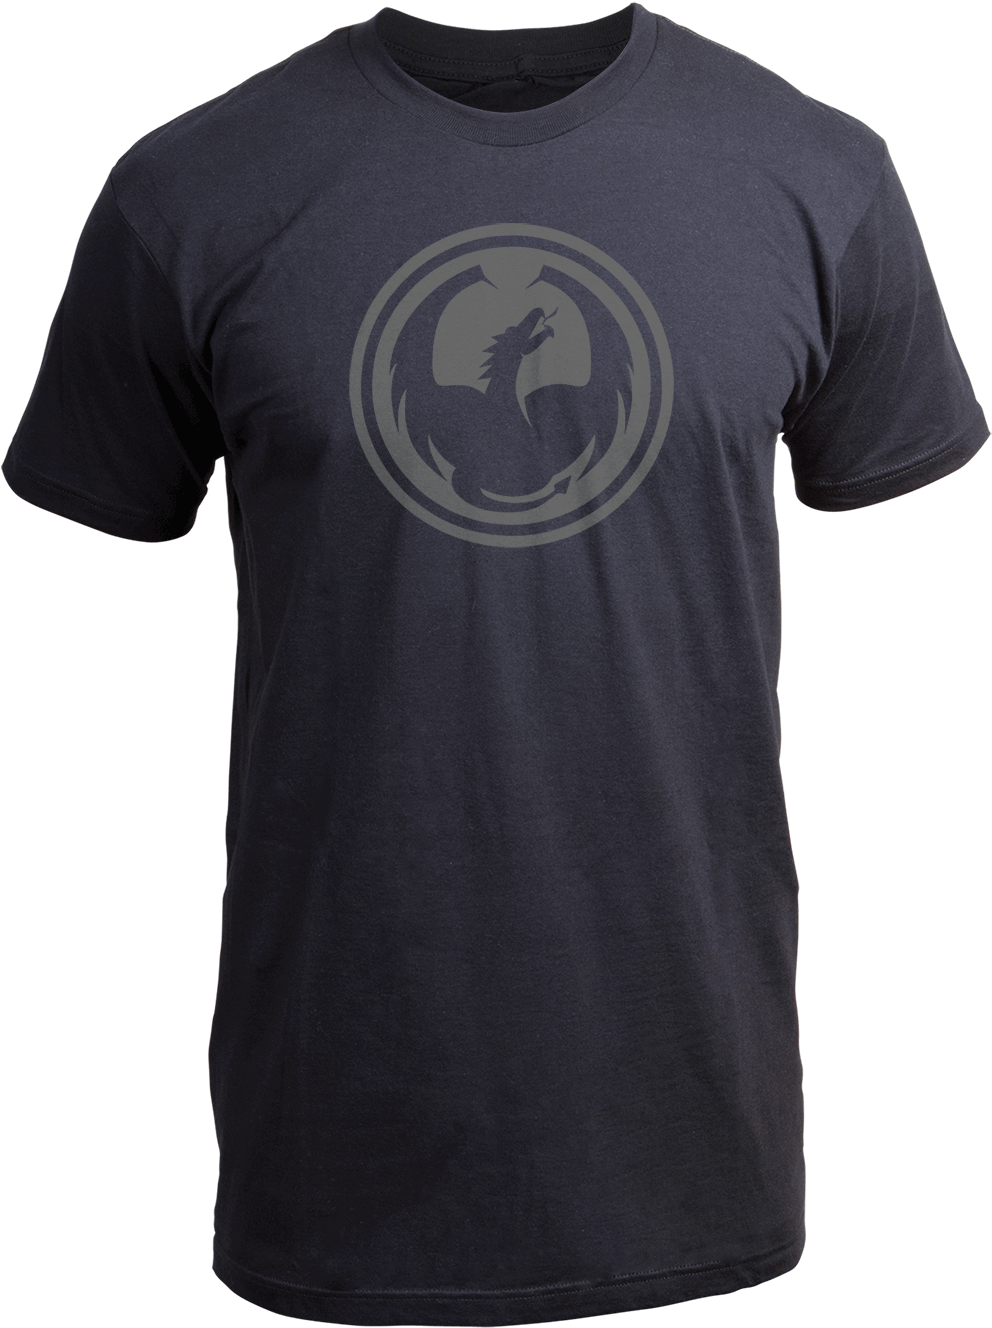 Navy Blue Horse Graphic Tee Shirt